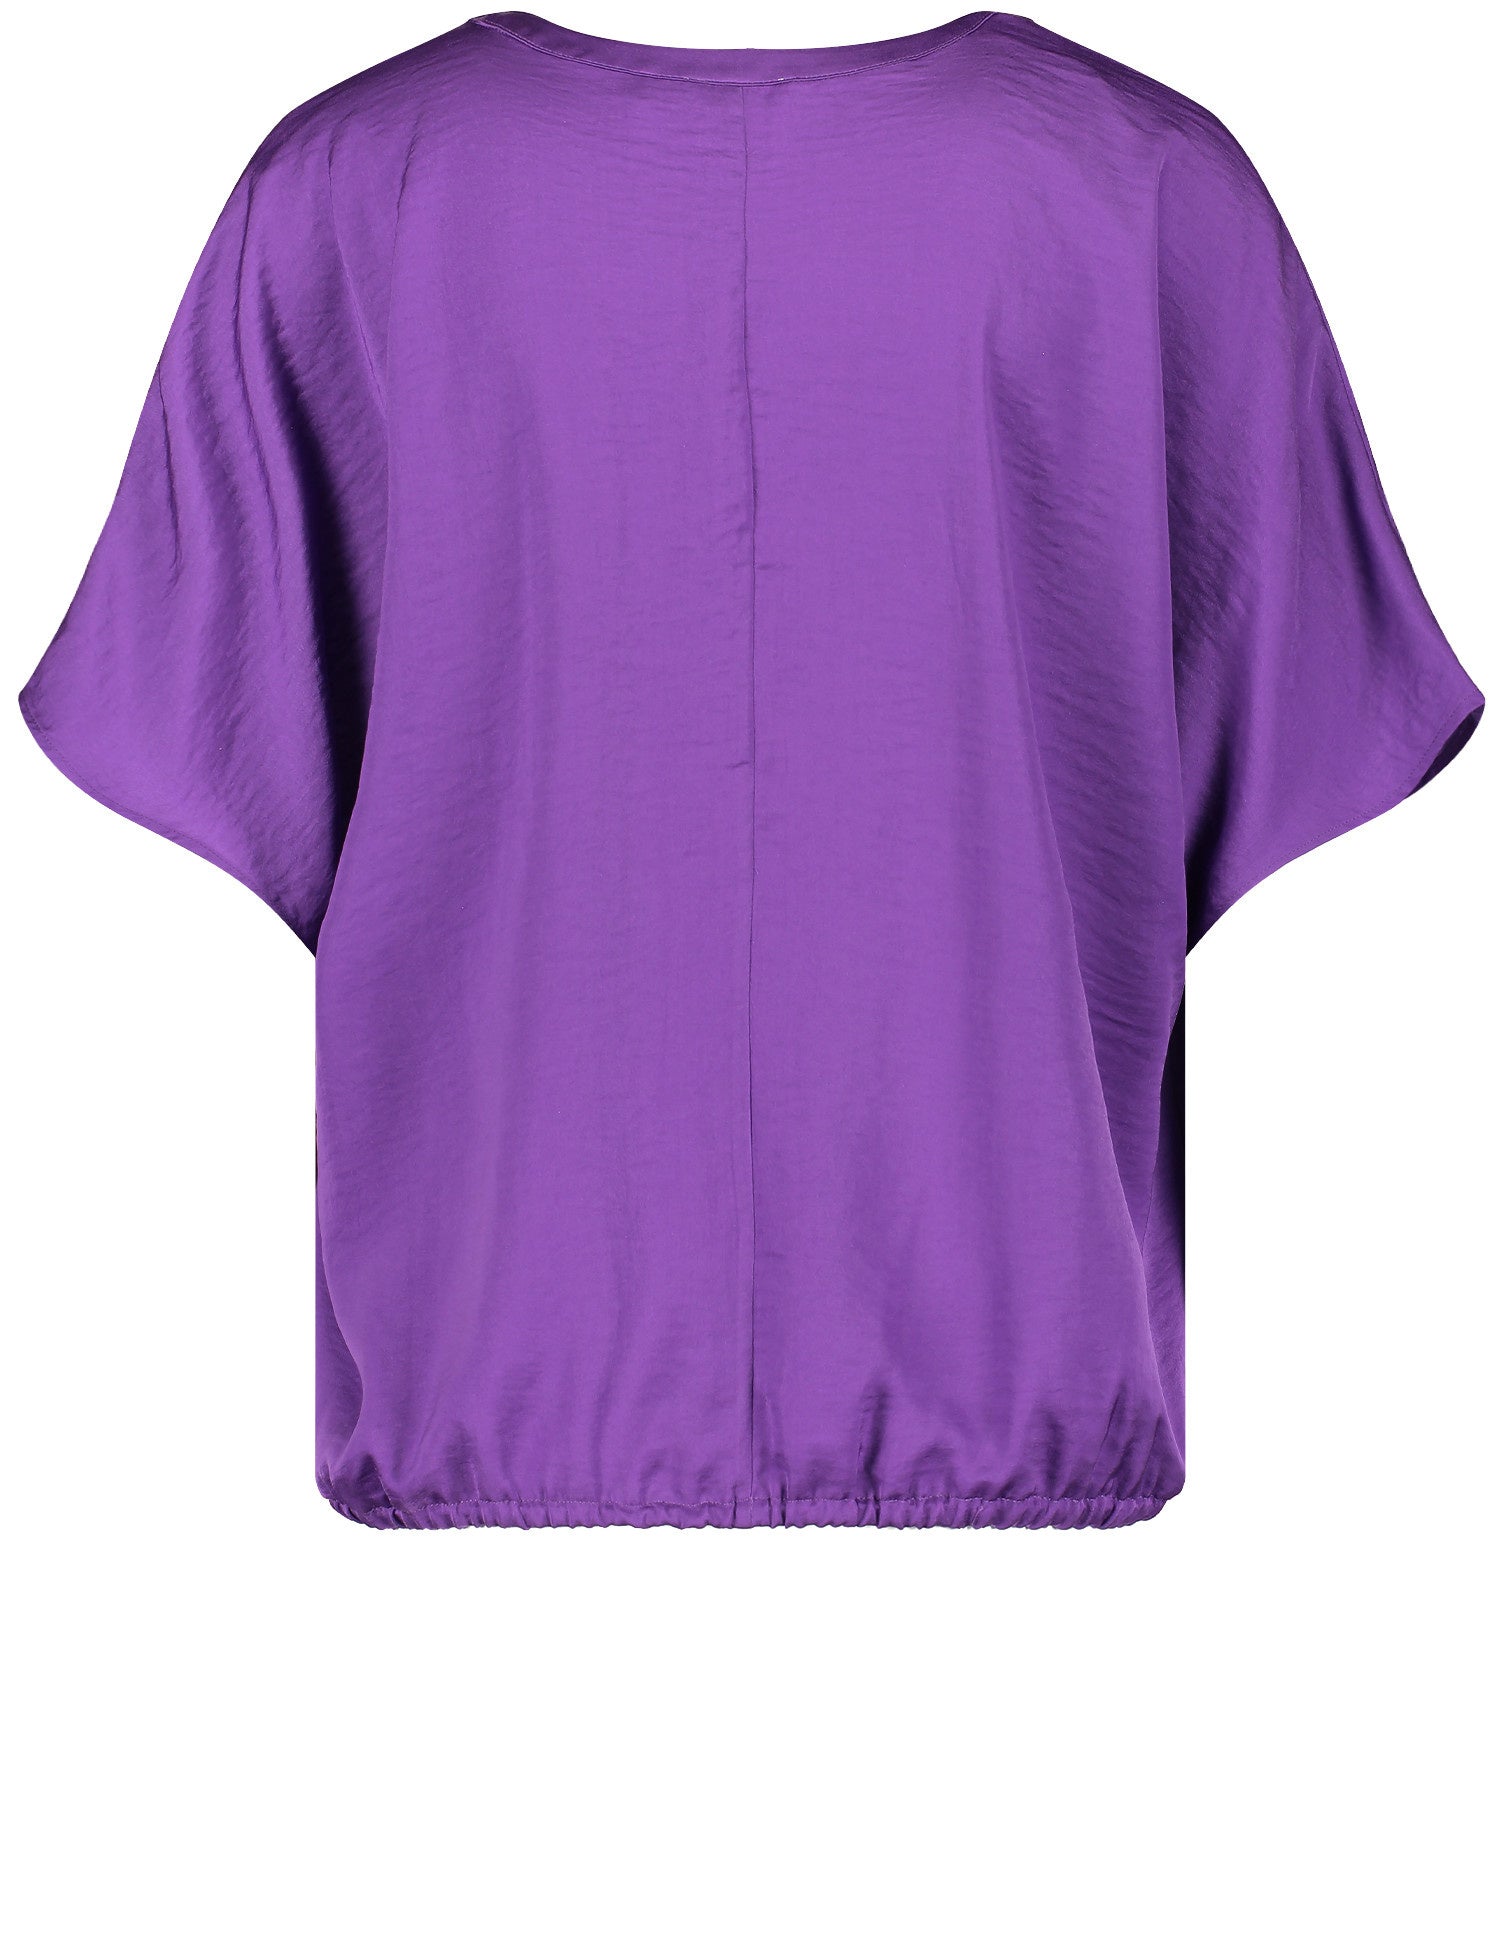 GERRY WEBER Purple Blouse 260001 223